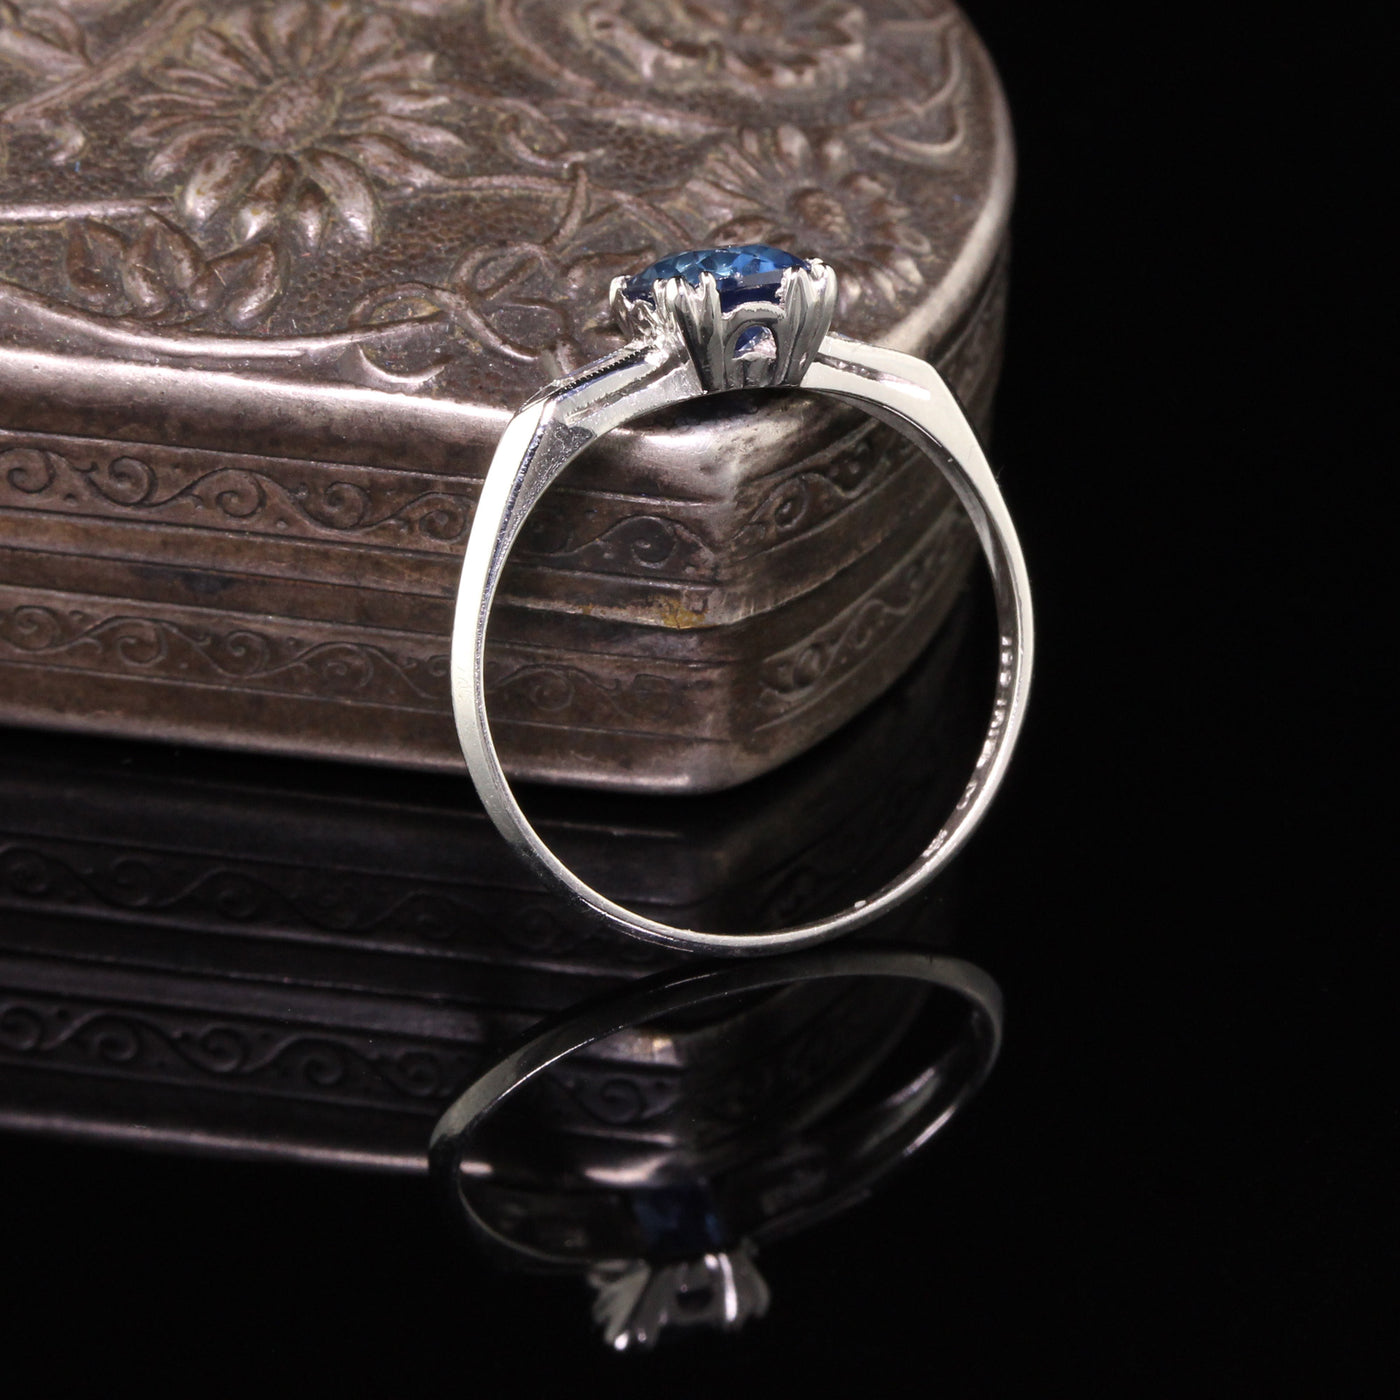 Antique Art Deco Platinum Sapphire and Diamond Engagement Ring - Layaway 4 of 4